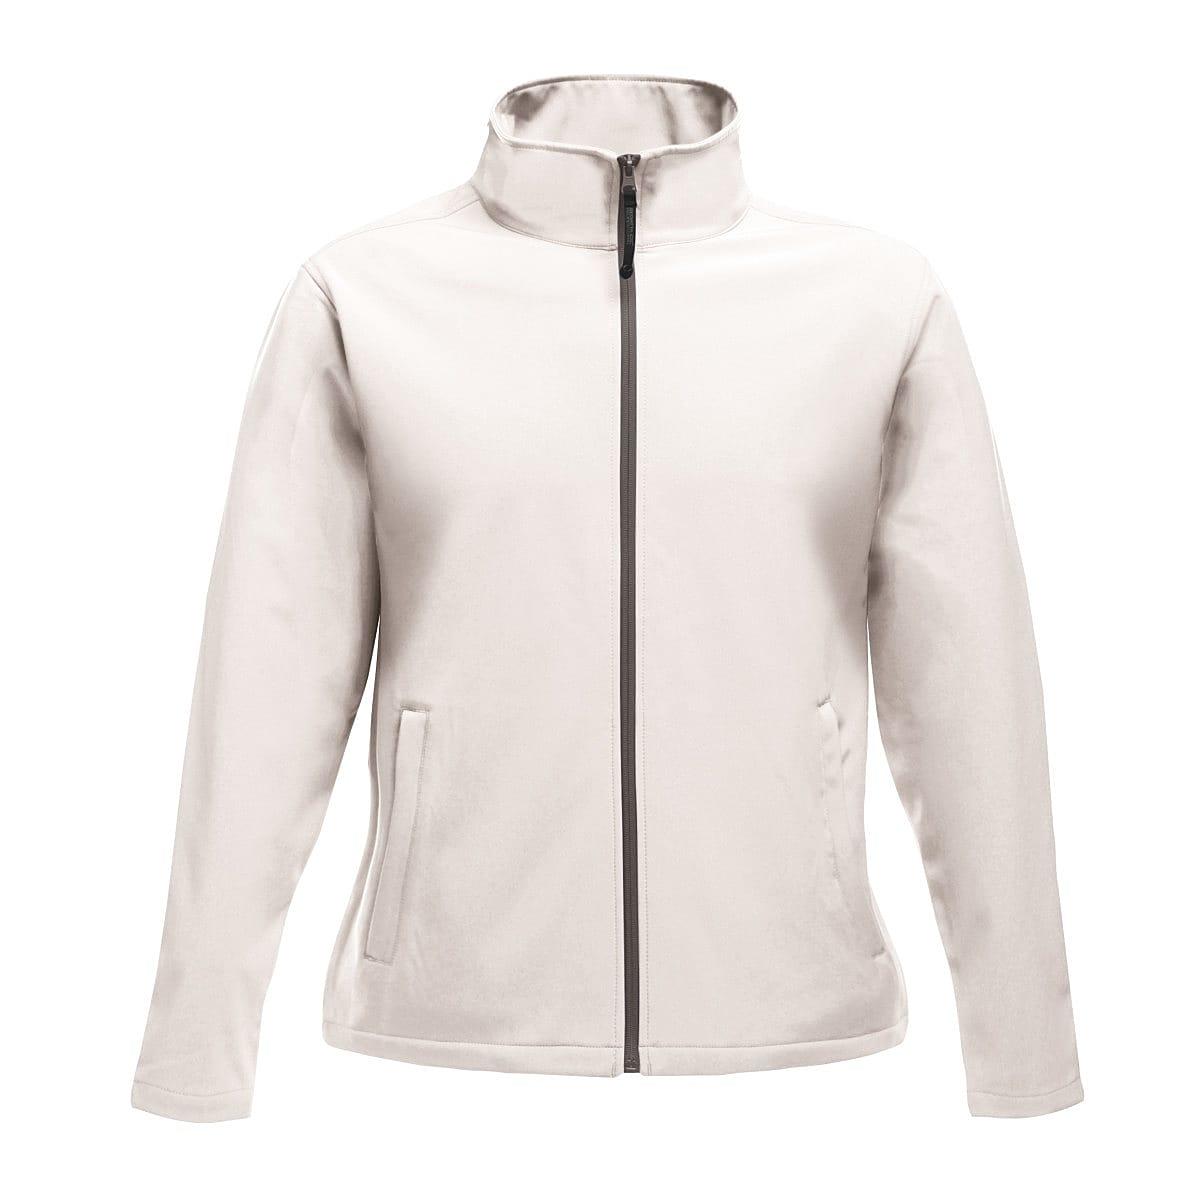 Regatta Women Ablaze Softshell Jacket in White / Light Steel (Product Code: TRA629)